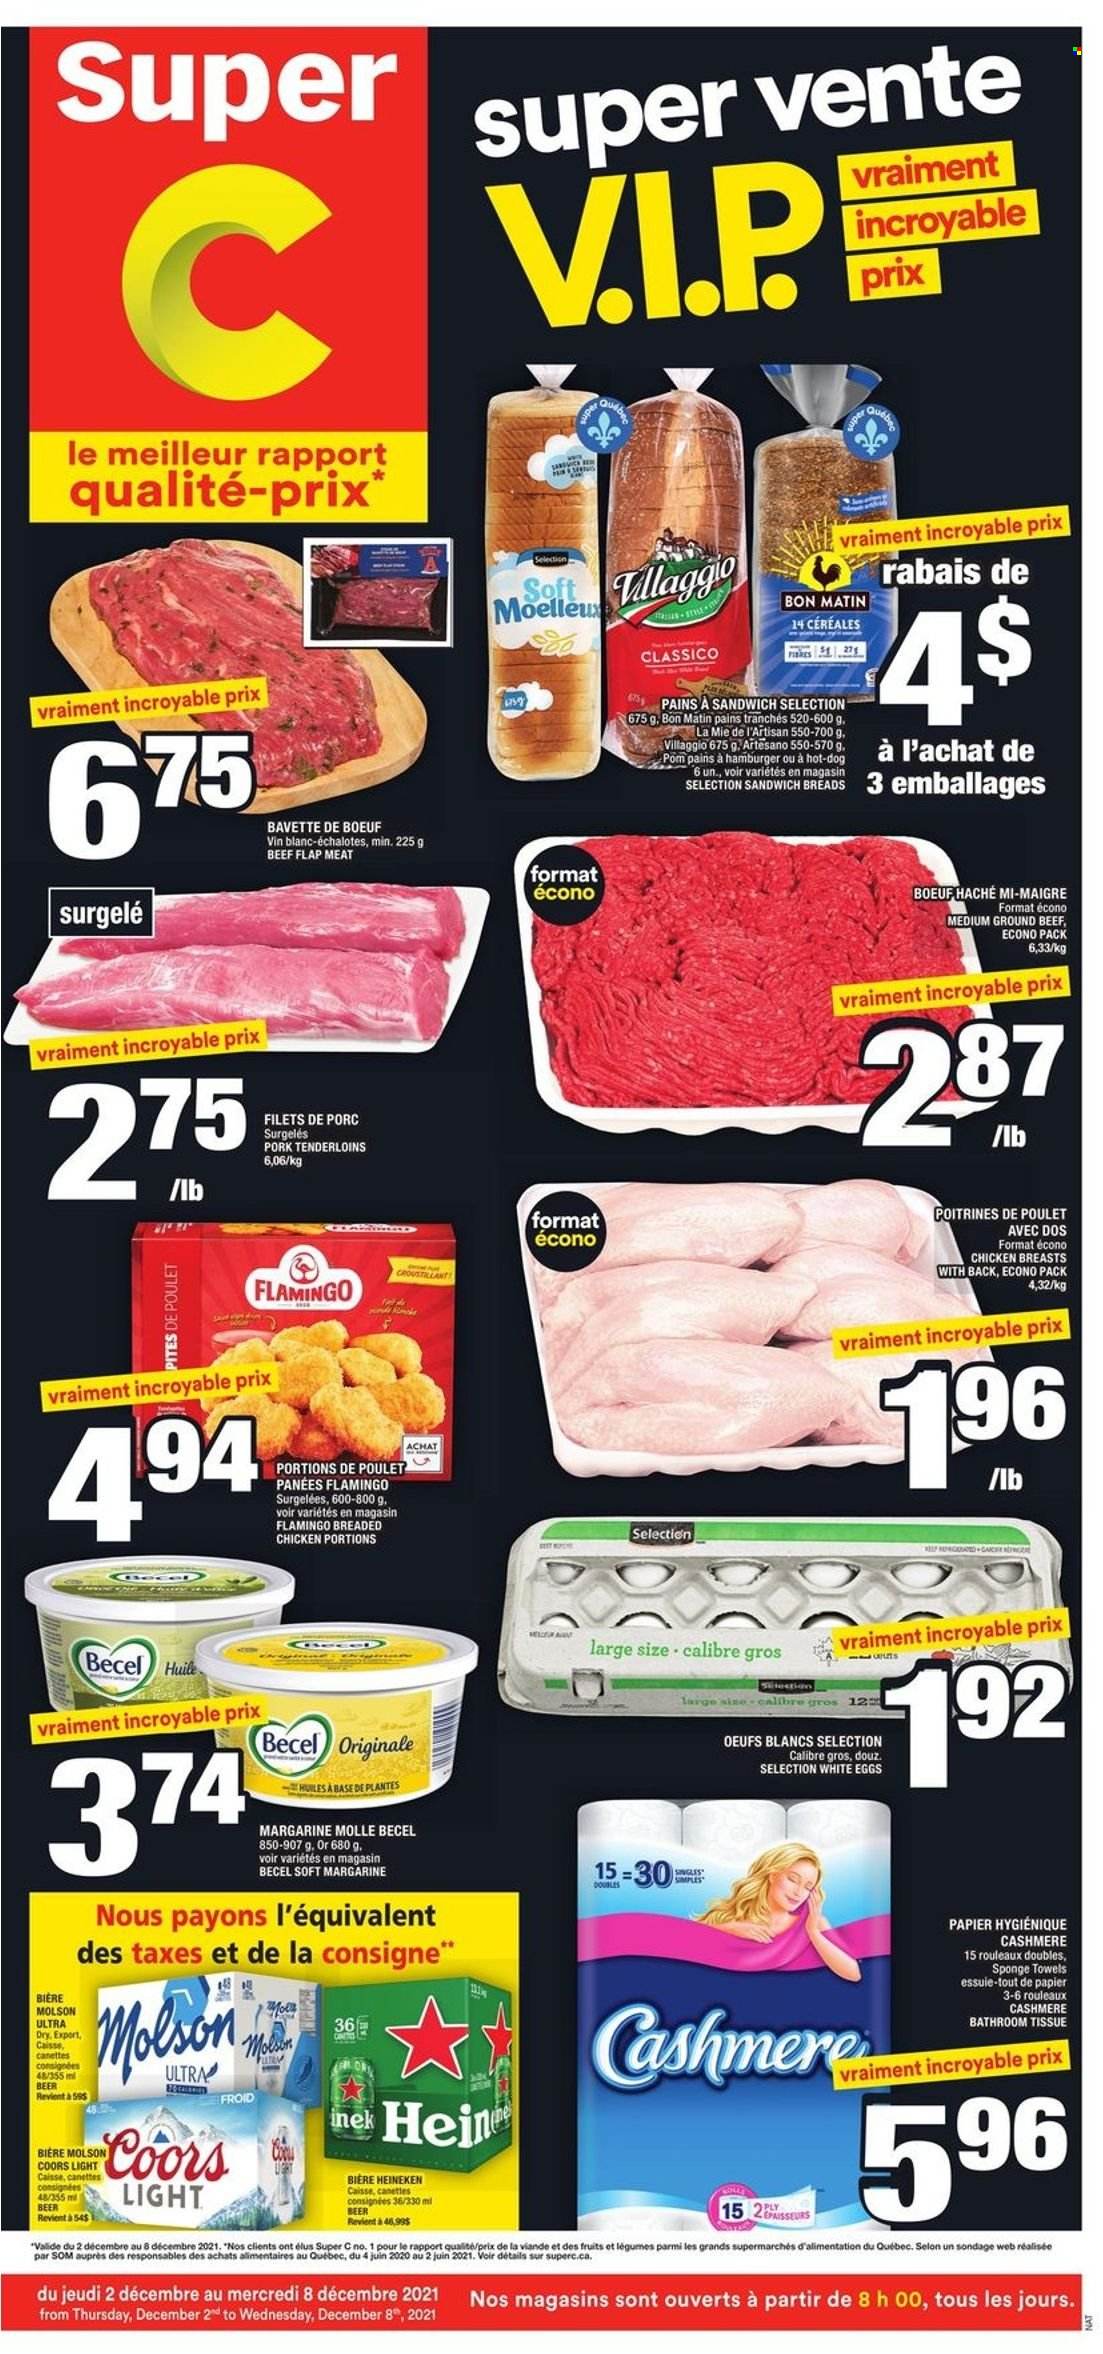 Super C Flyer - December 02, 2021 - December 08, 2021 - Sales products - sandwich, hamburger, eggs, margarine, Classico, beer, Heineken, beef meat, ground beef, pork tenderloin, bath tissue, Coors. Page 1.